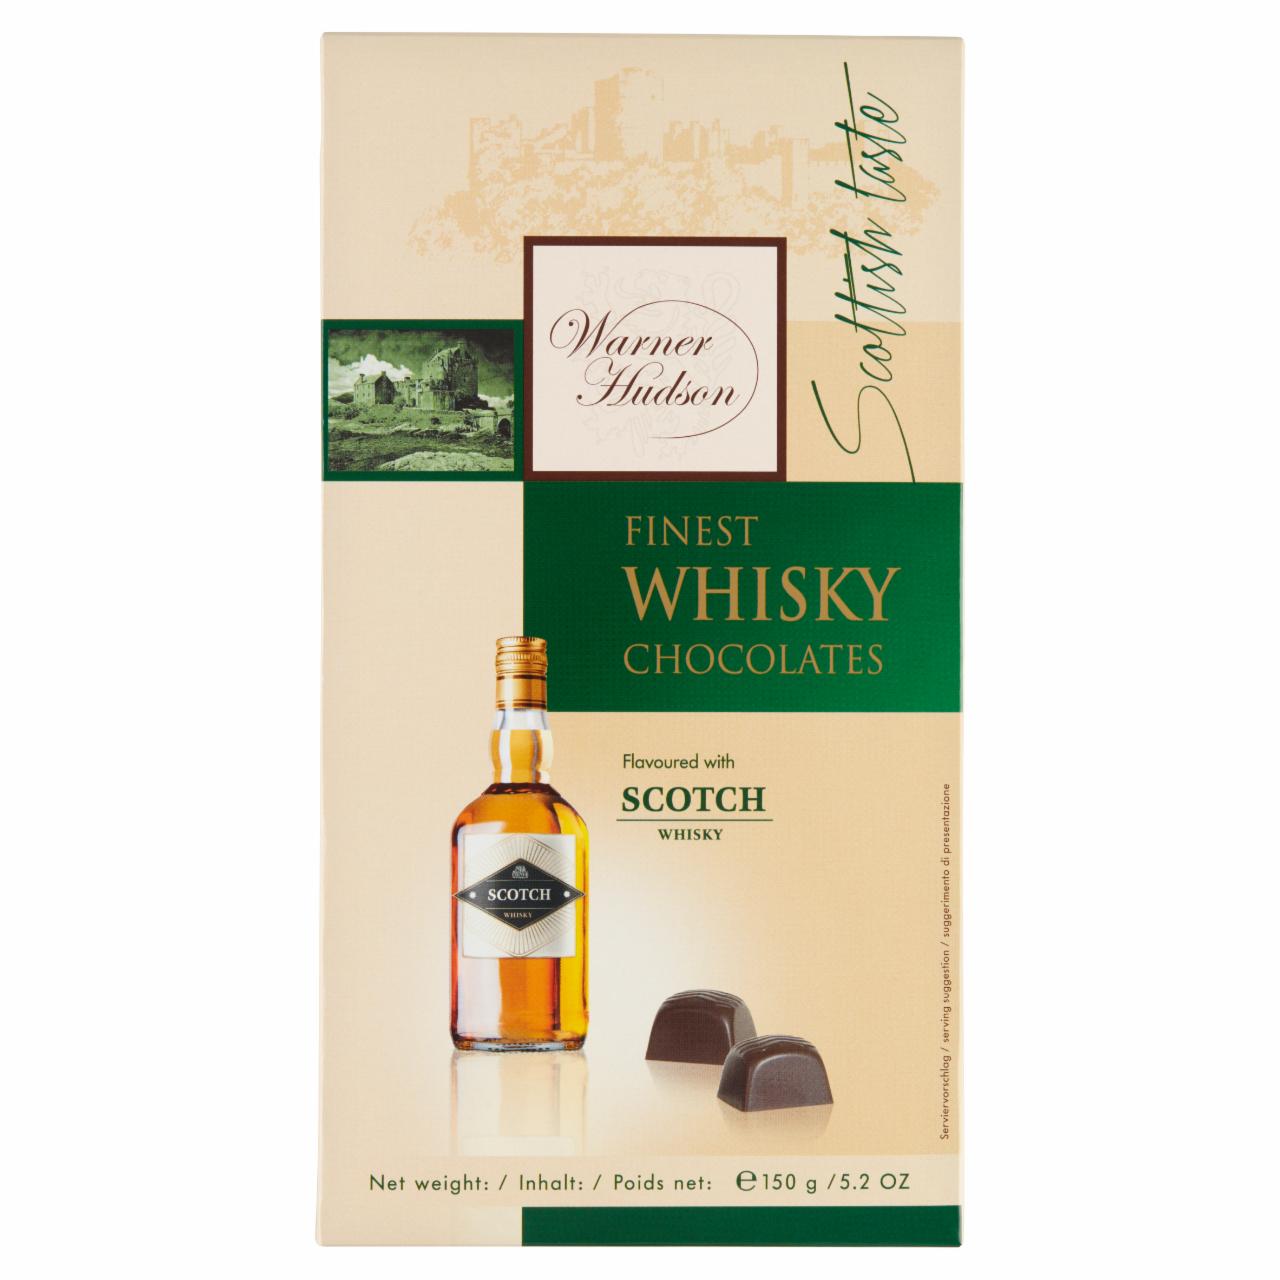 Photo - Warner Hudson Finest Whisky Chocolates Flavoured Scotch Whisky 150 g